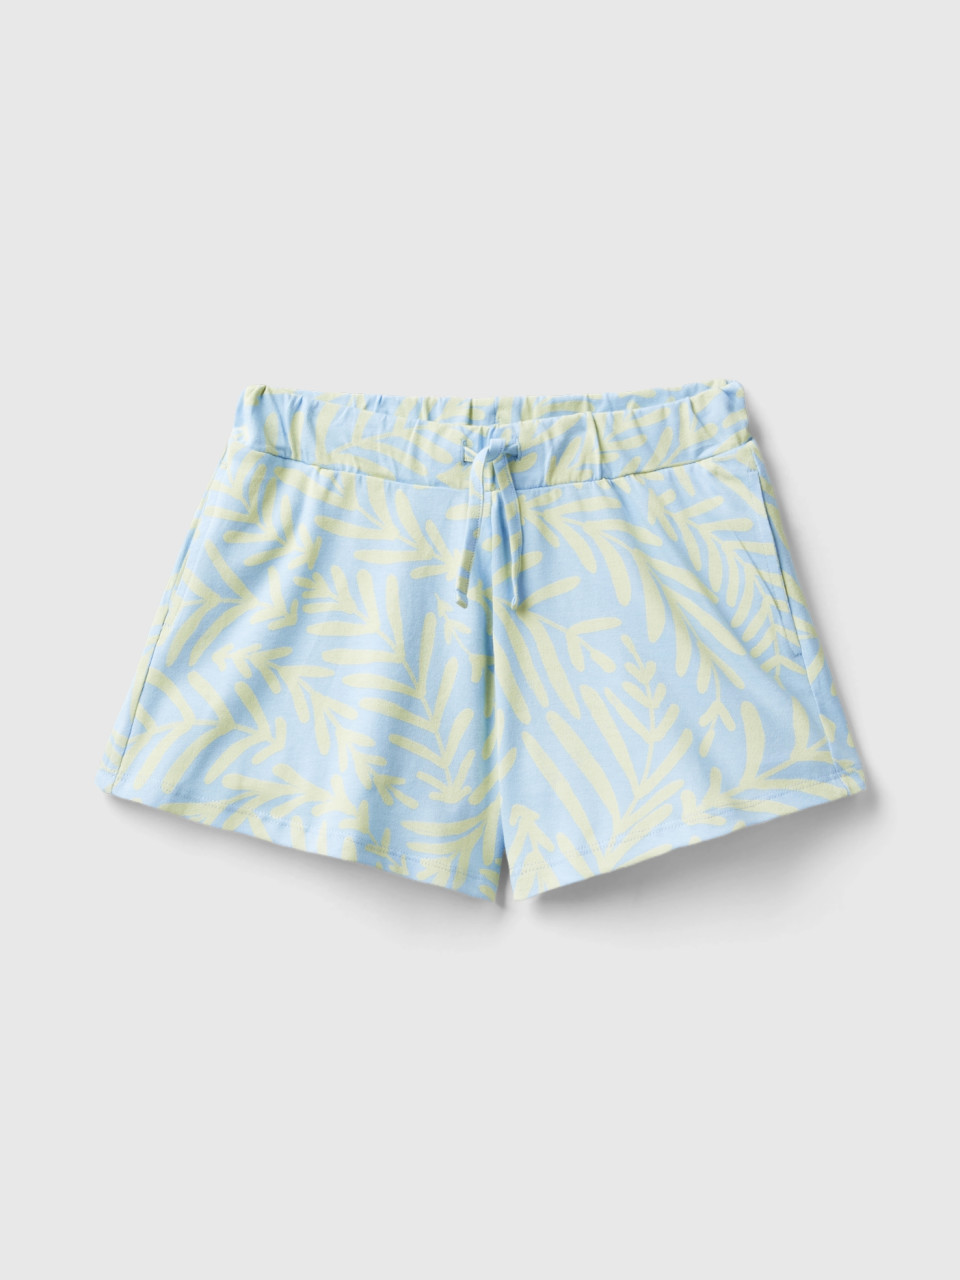 Benetton, Light Blue Shorts With Tropical Print, Sky Blue, Kids